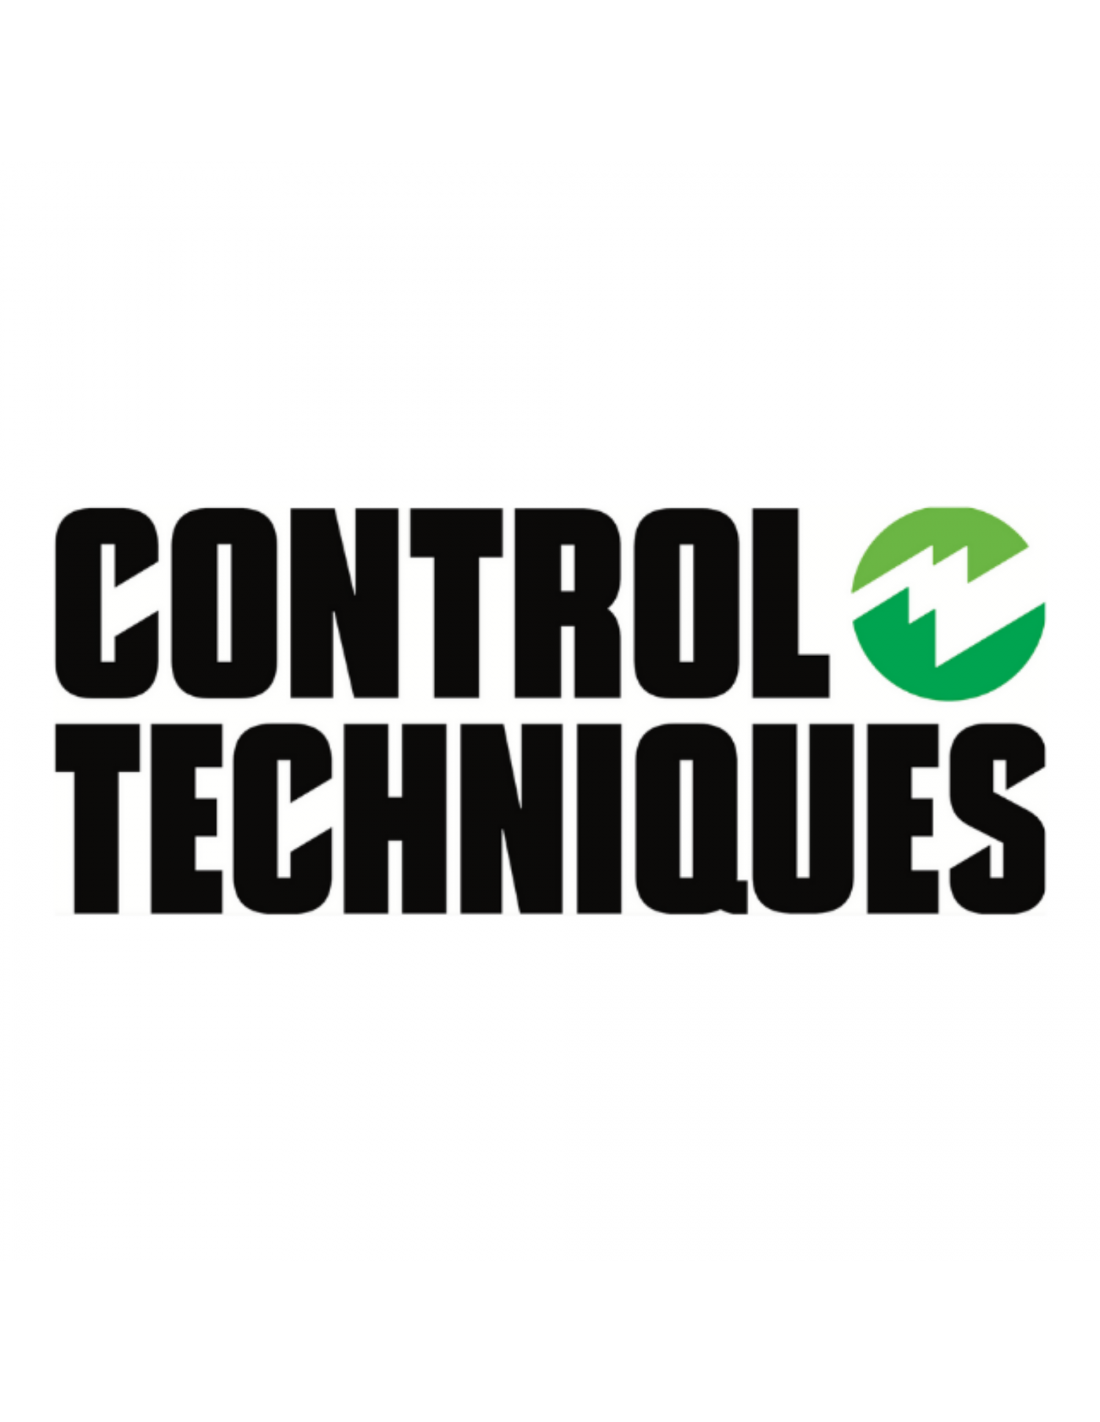 Control techniques